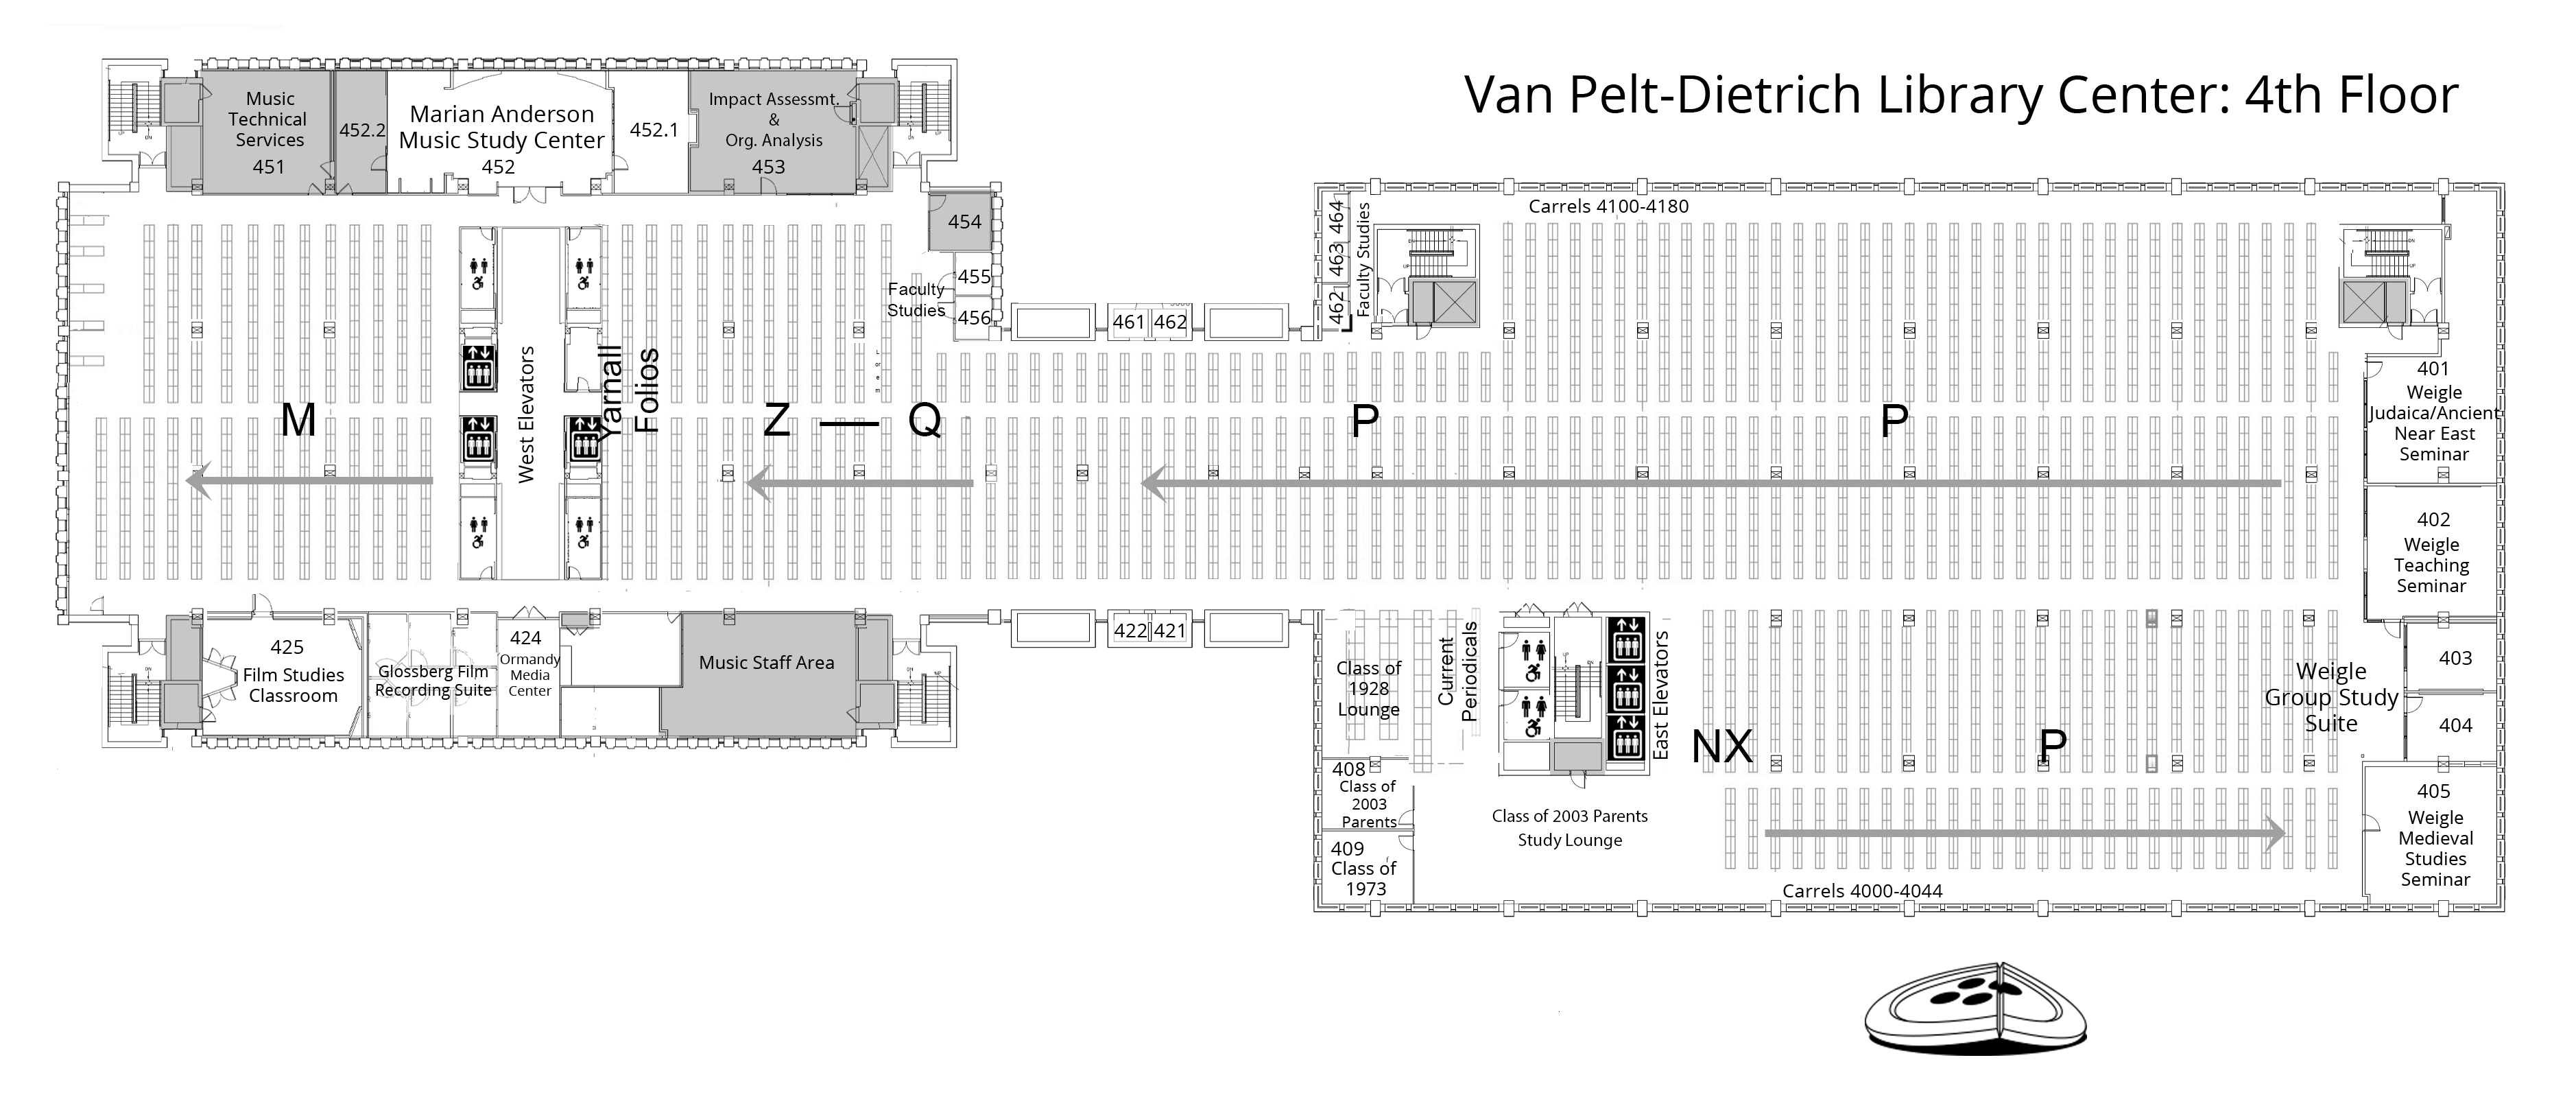 fourth floor plan, Van Pelt-Dietrich Library Center. Full description is linked below.